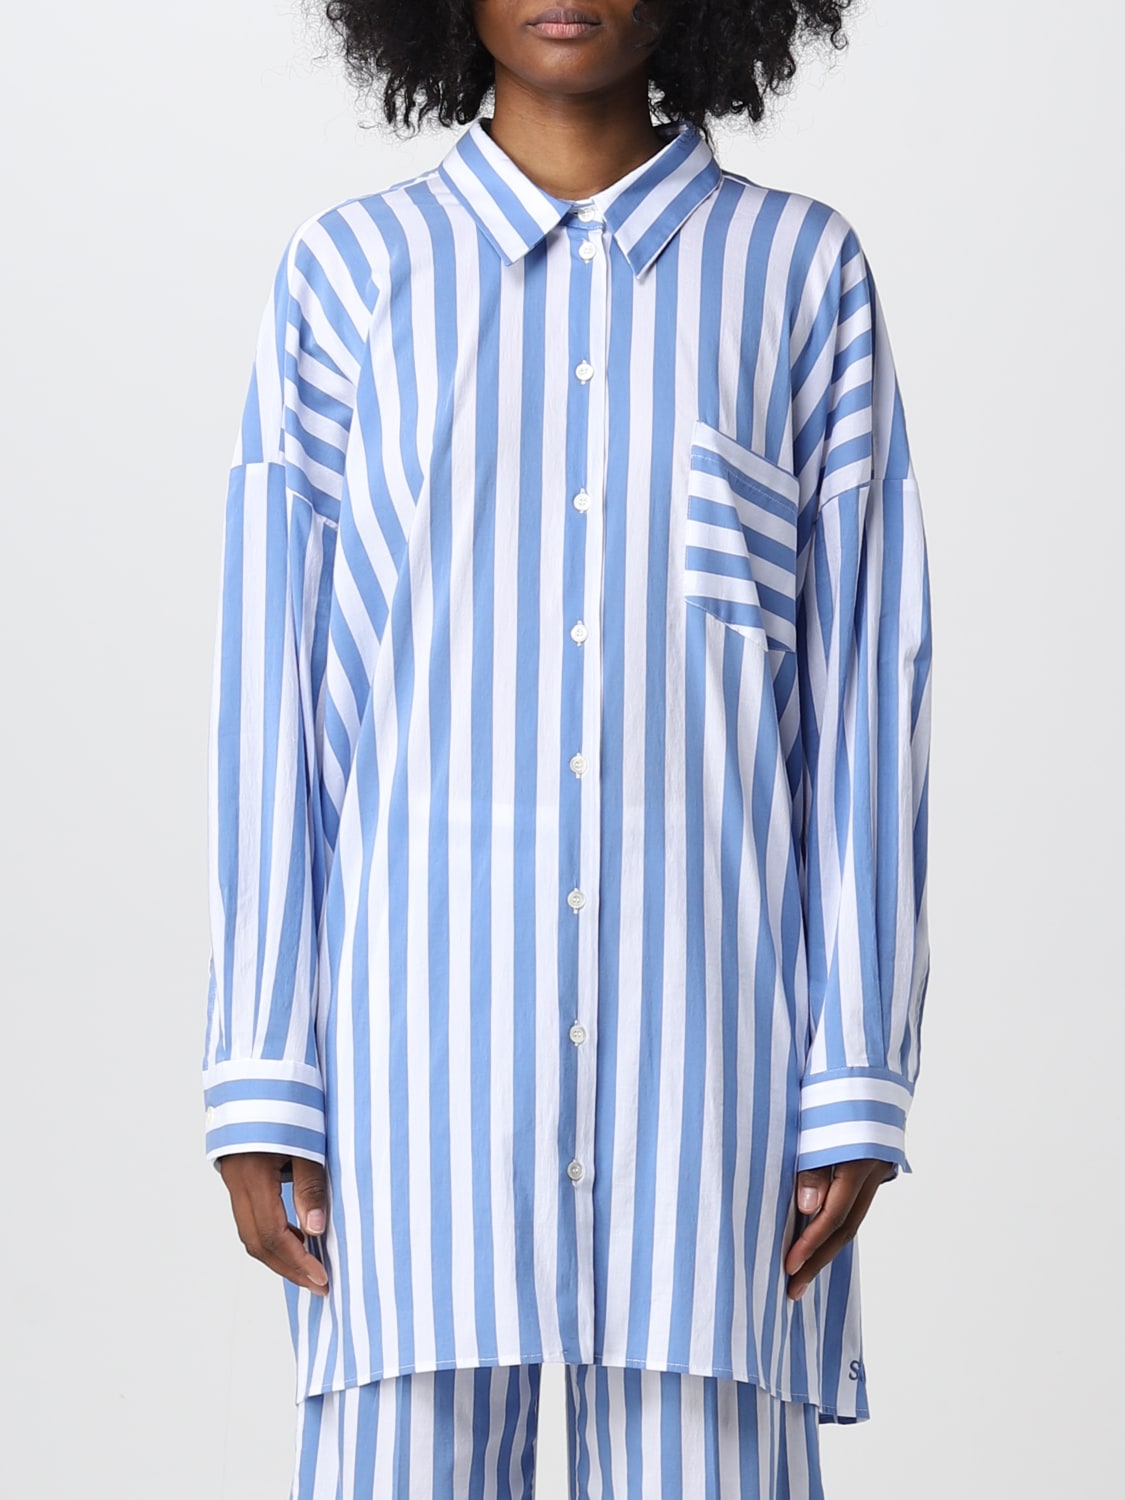 Monki oversized shirt in blue and white stripe